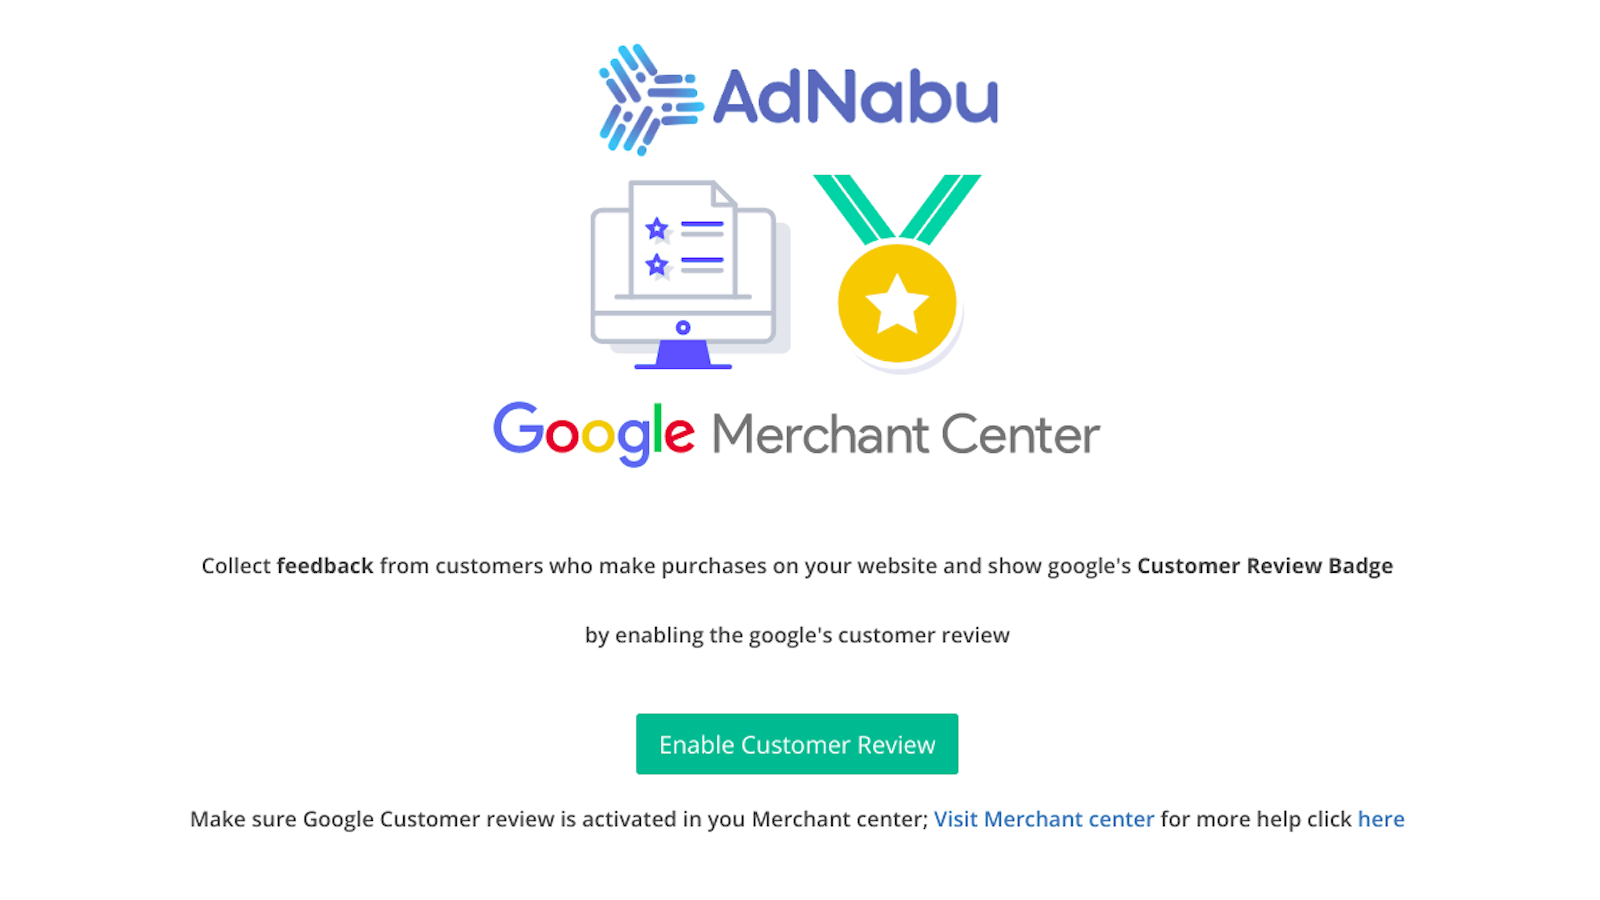 5. Google Customer Reviews by AdNabu